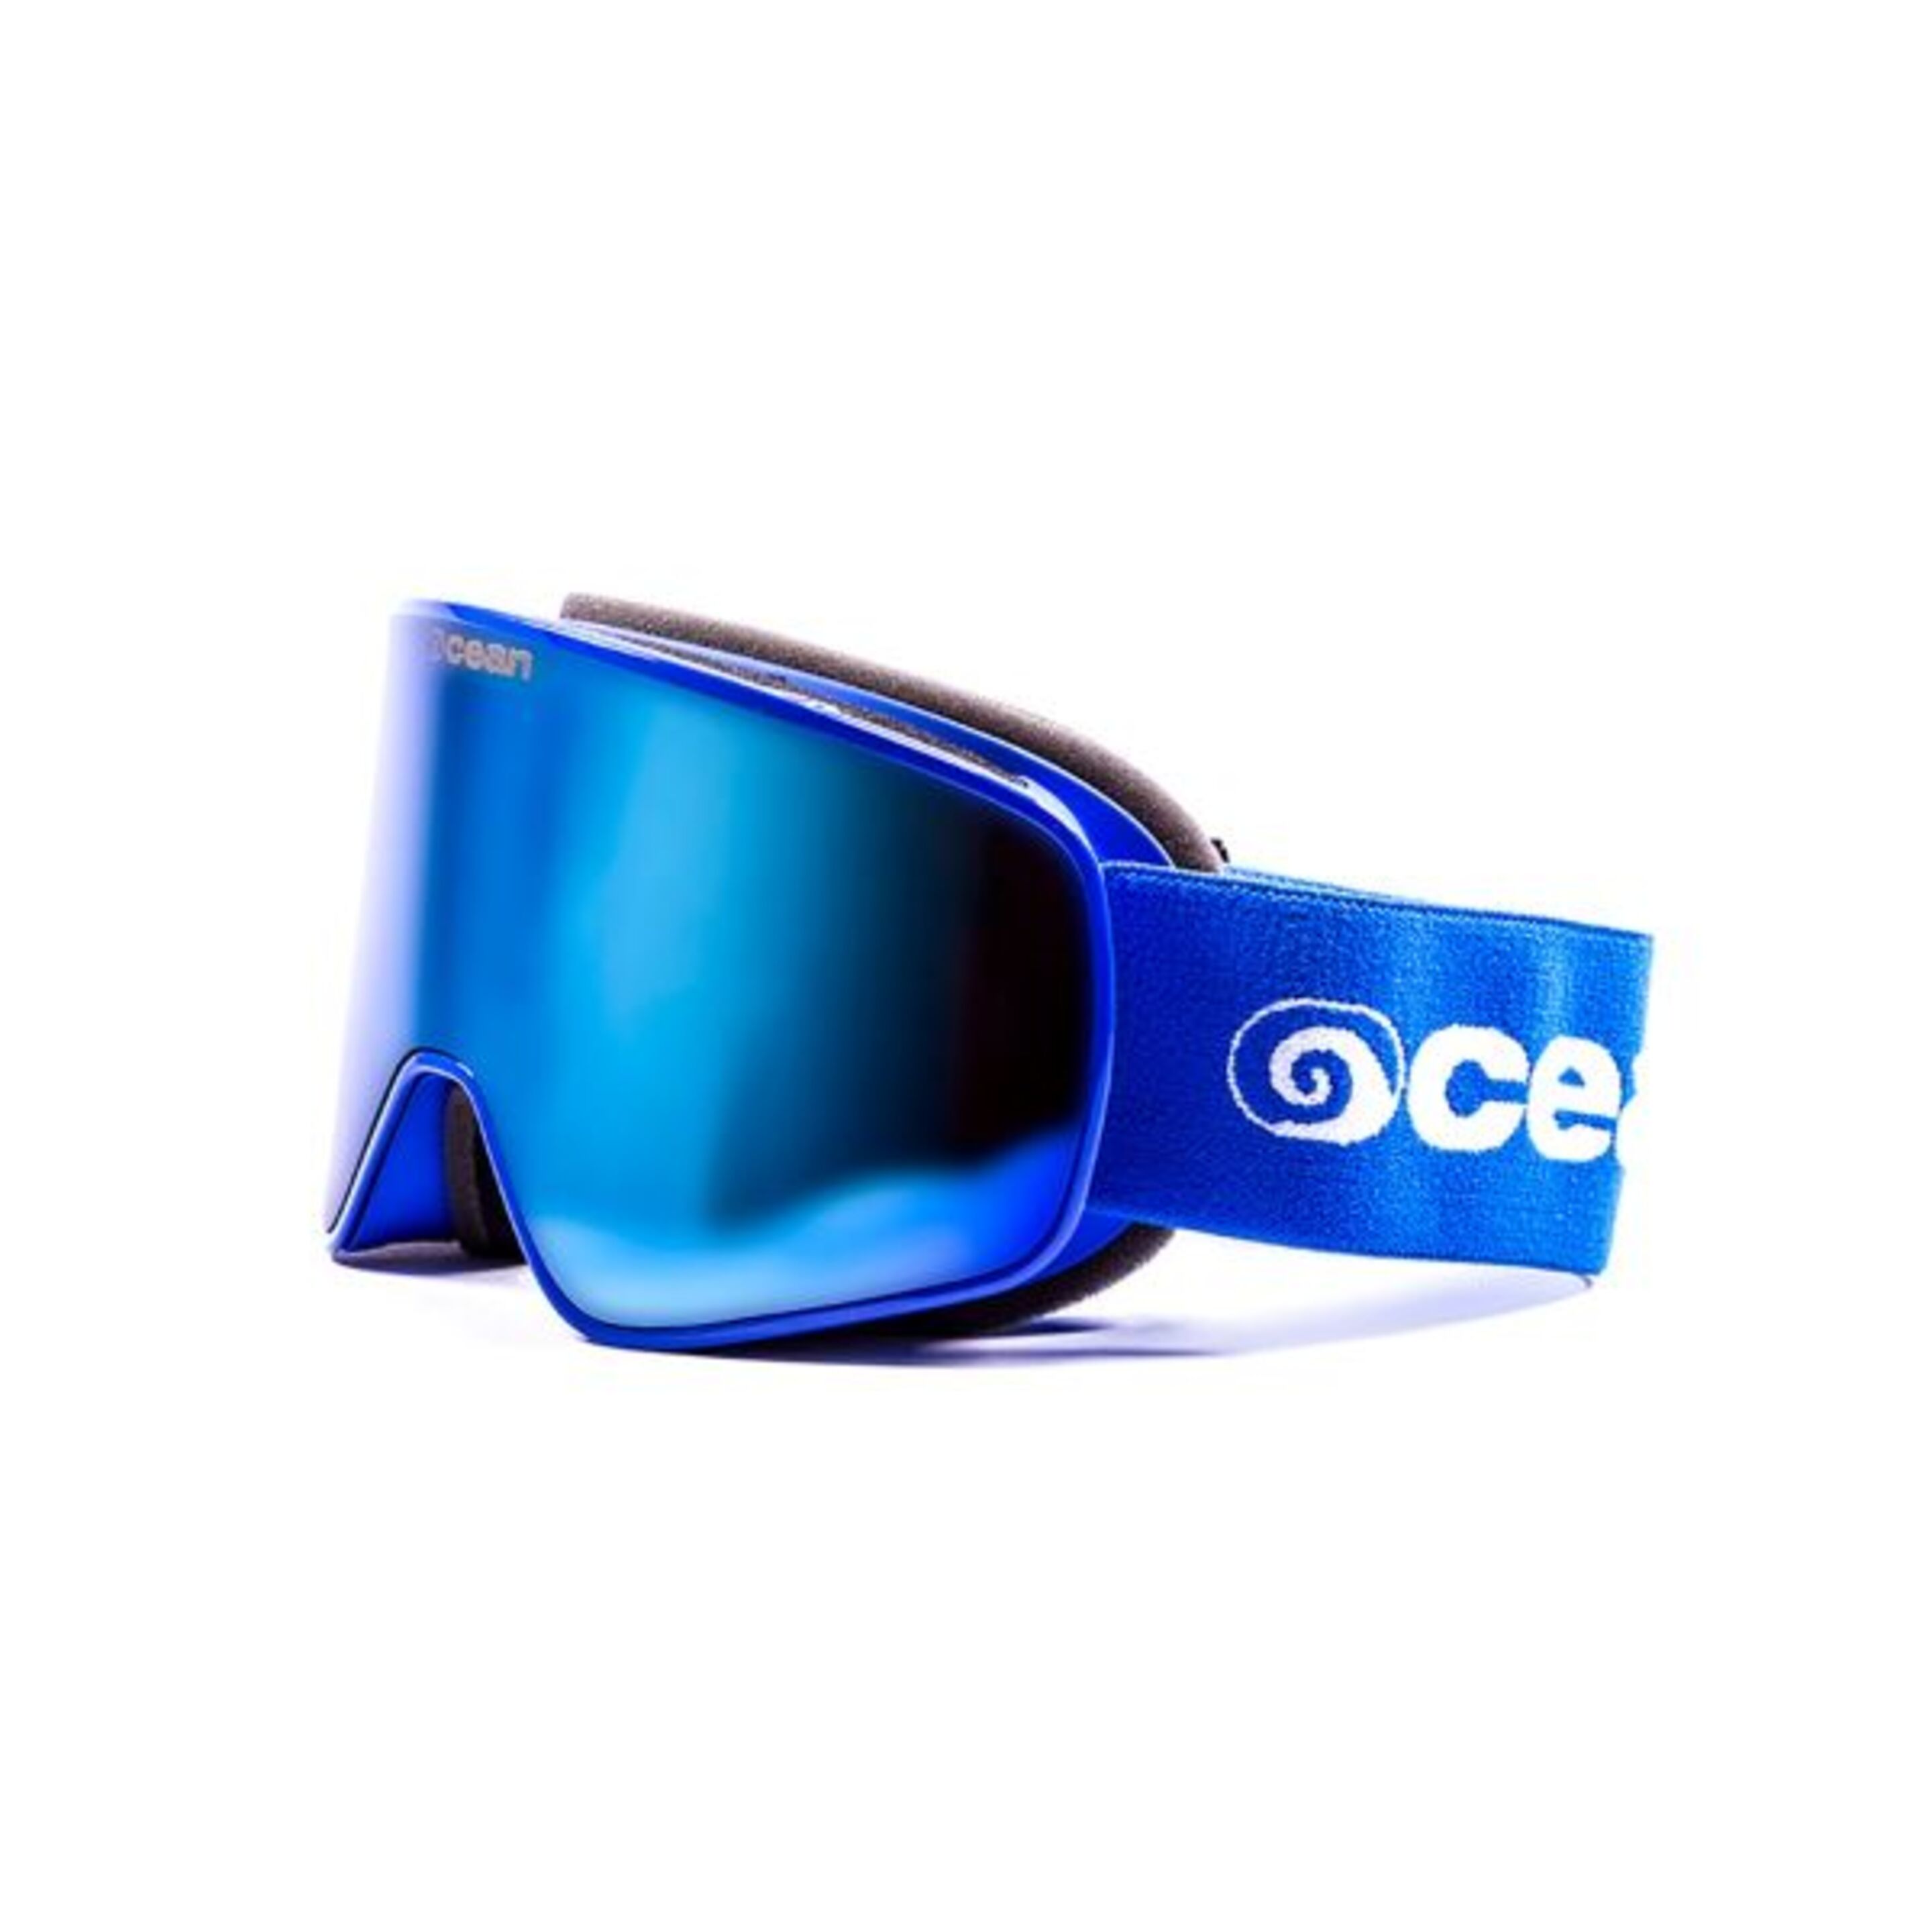 Mascara De Ski Ocean Sunglasses Aspen - Azul - Máscara De Ski Aspen  MKP